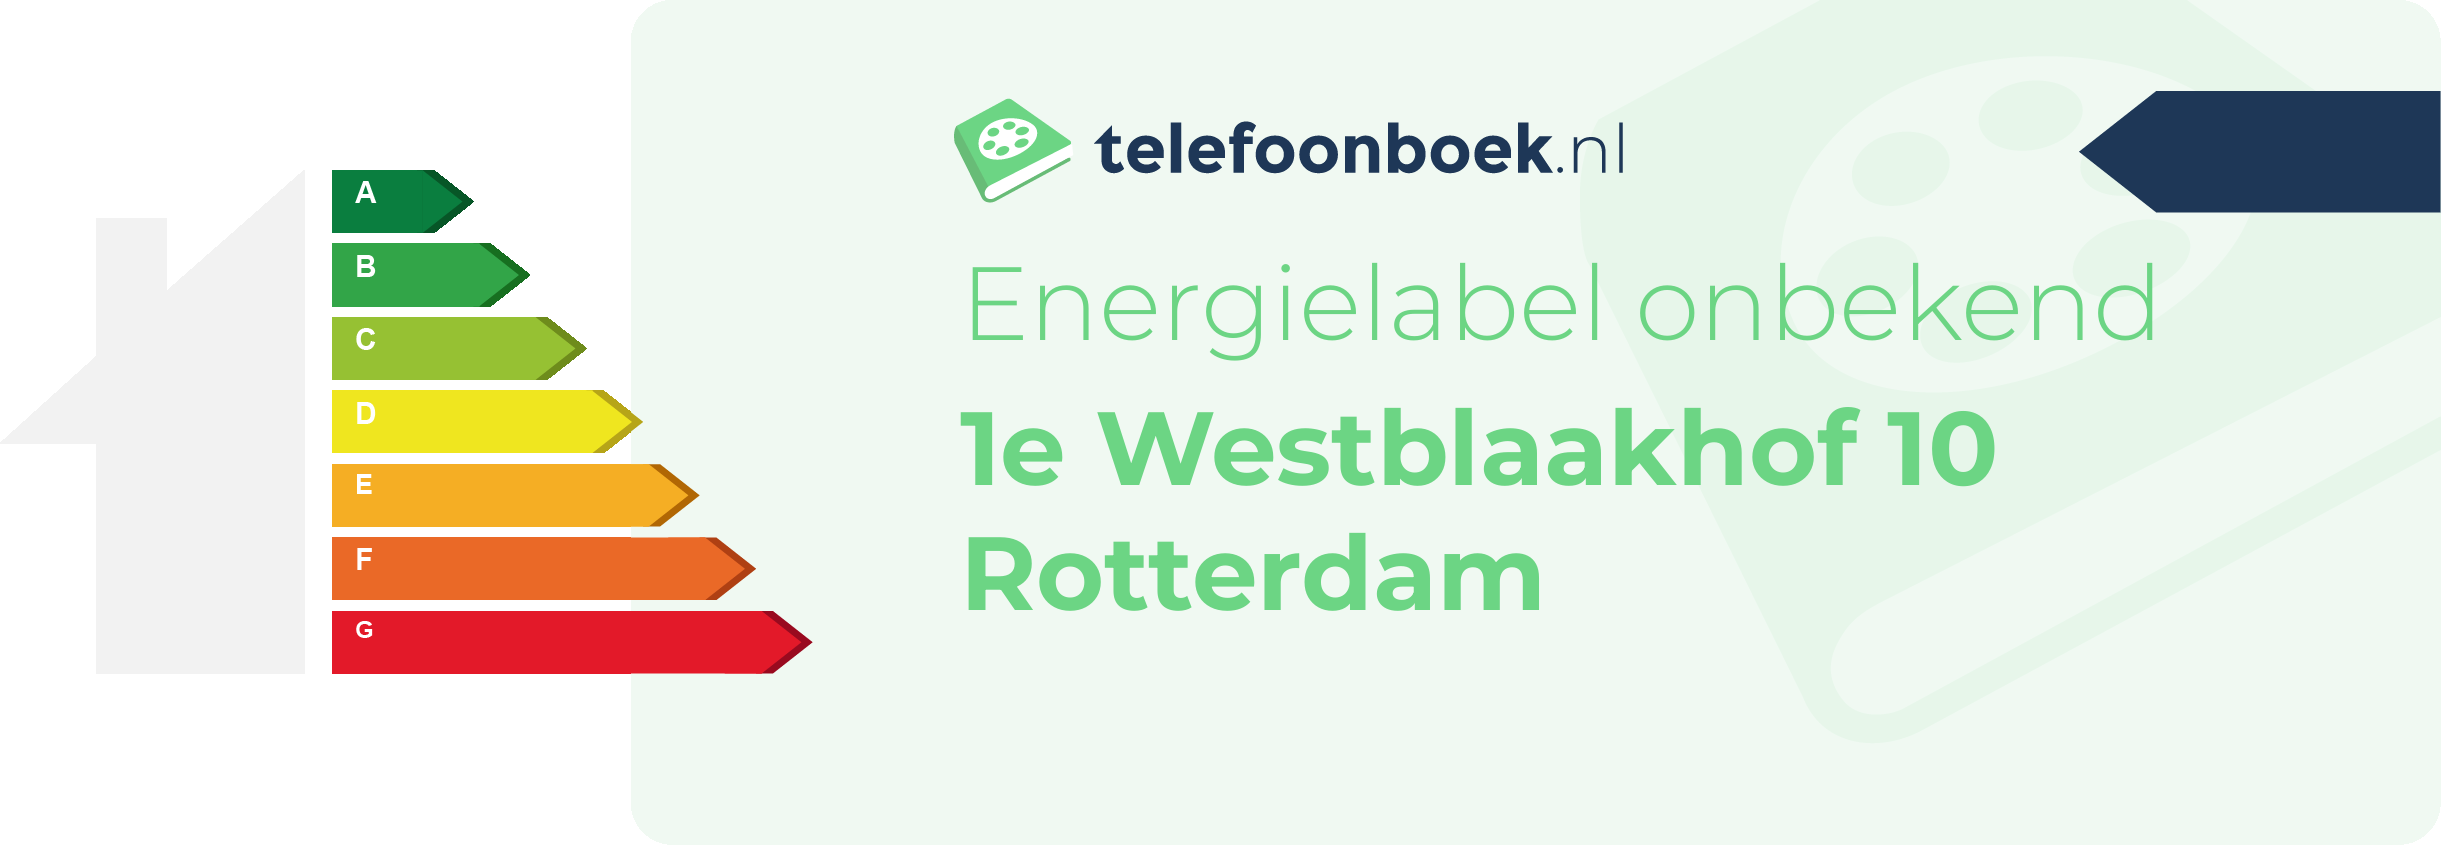 Energielabel 1e Westblaakhof 10 Rotterdam